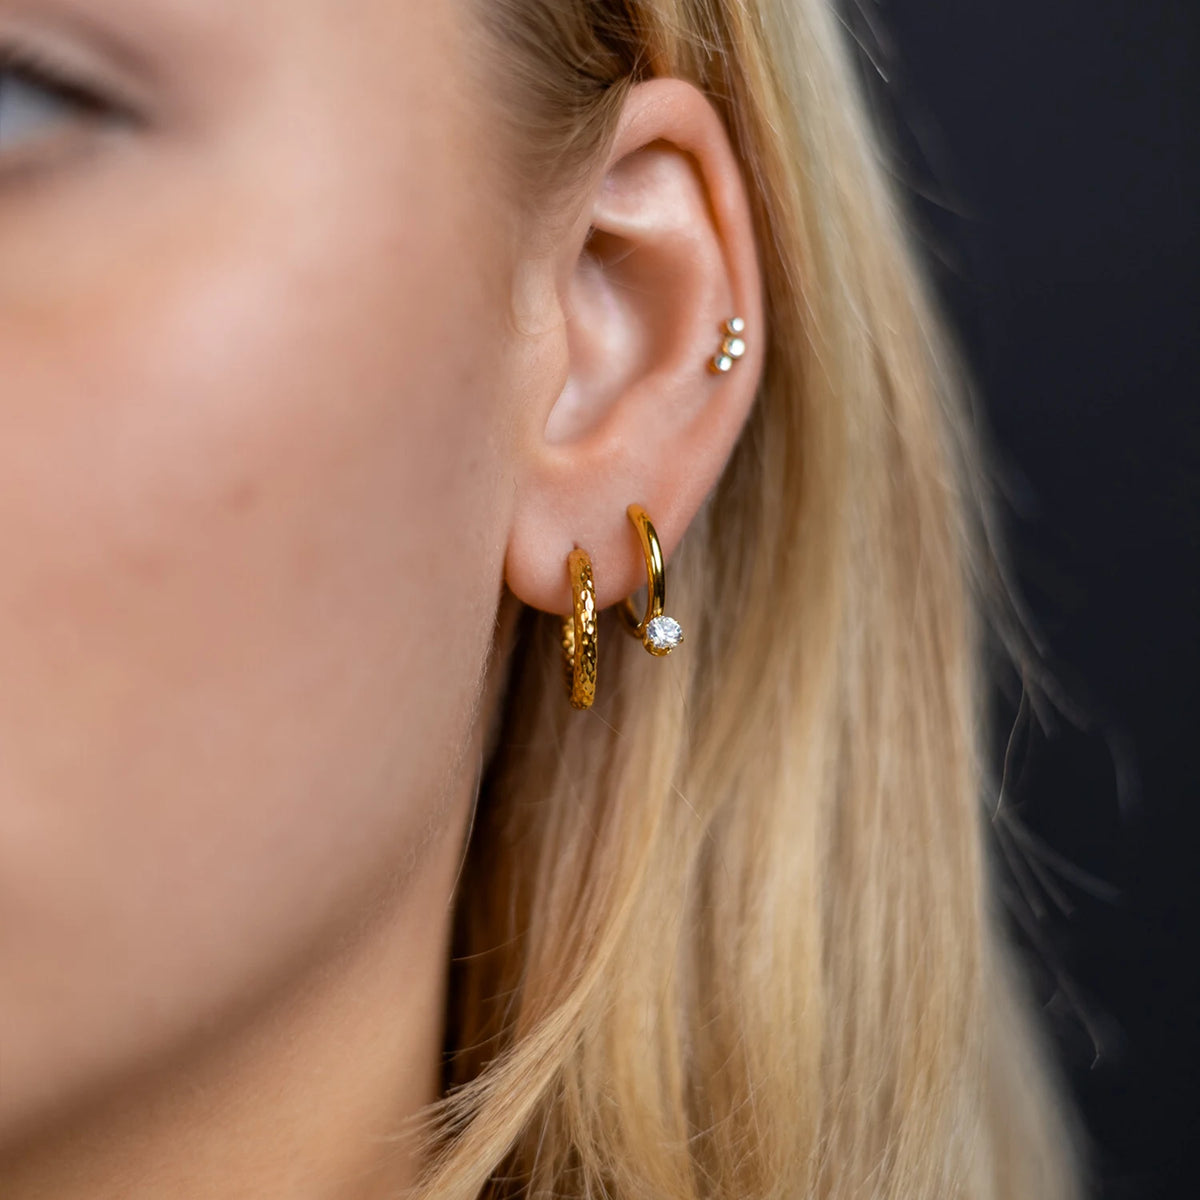 Hoop earrings BLING | gold 